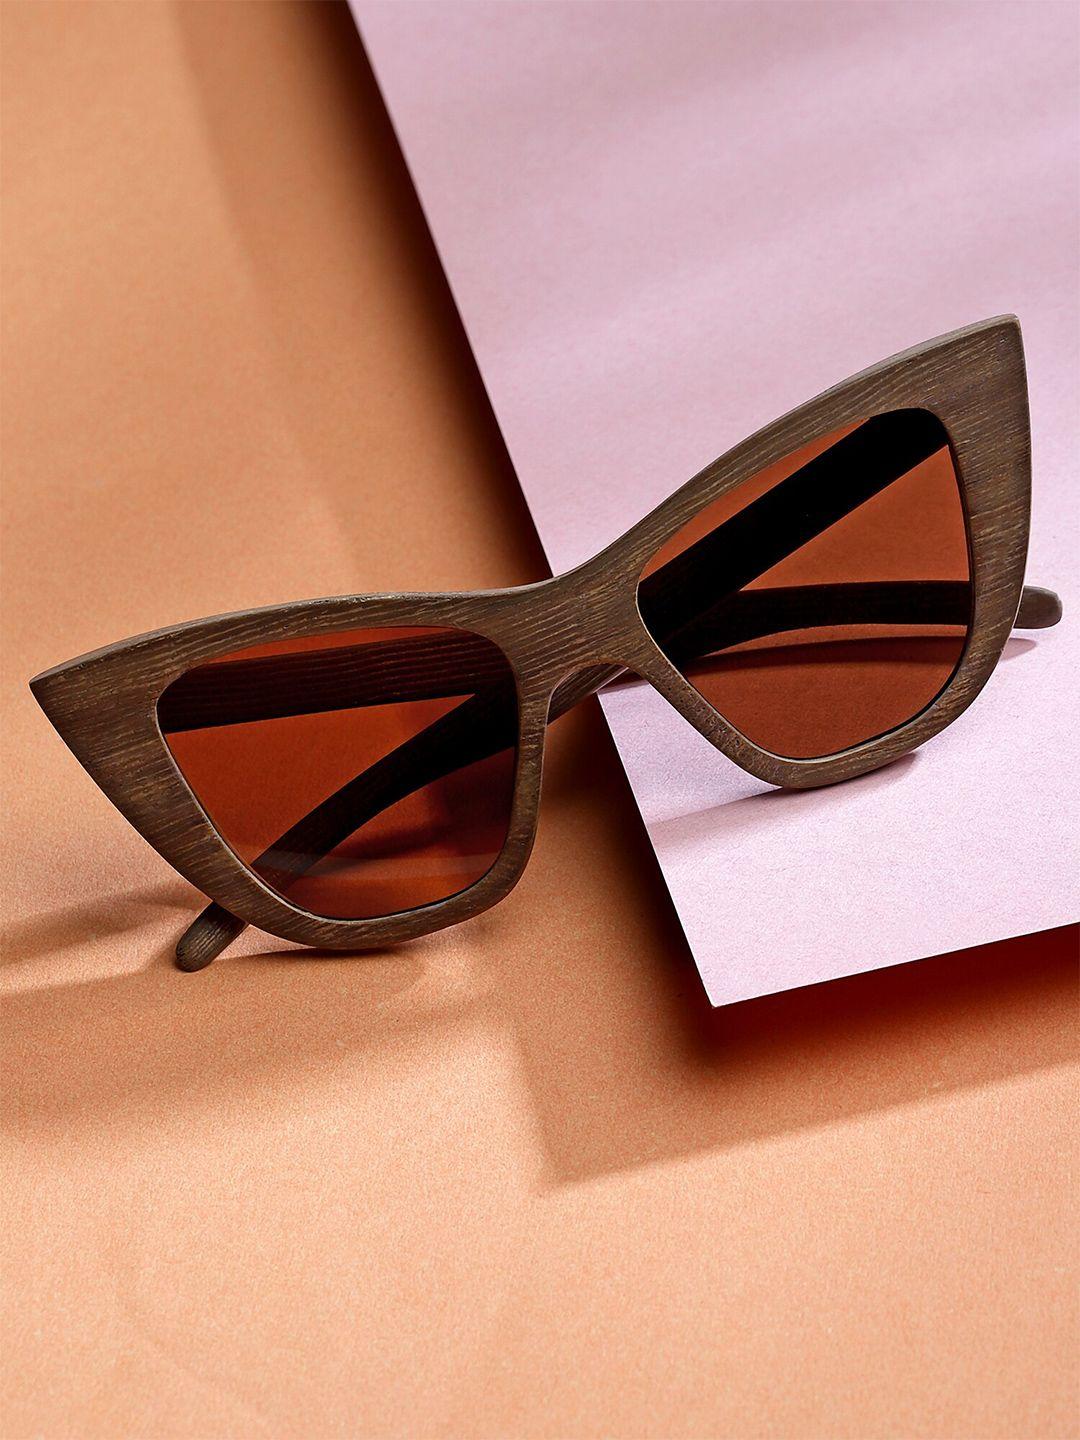 sasha unisex brown cateye sunglasses vrsg- 125-weathered vintage light & brown lens